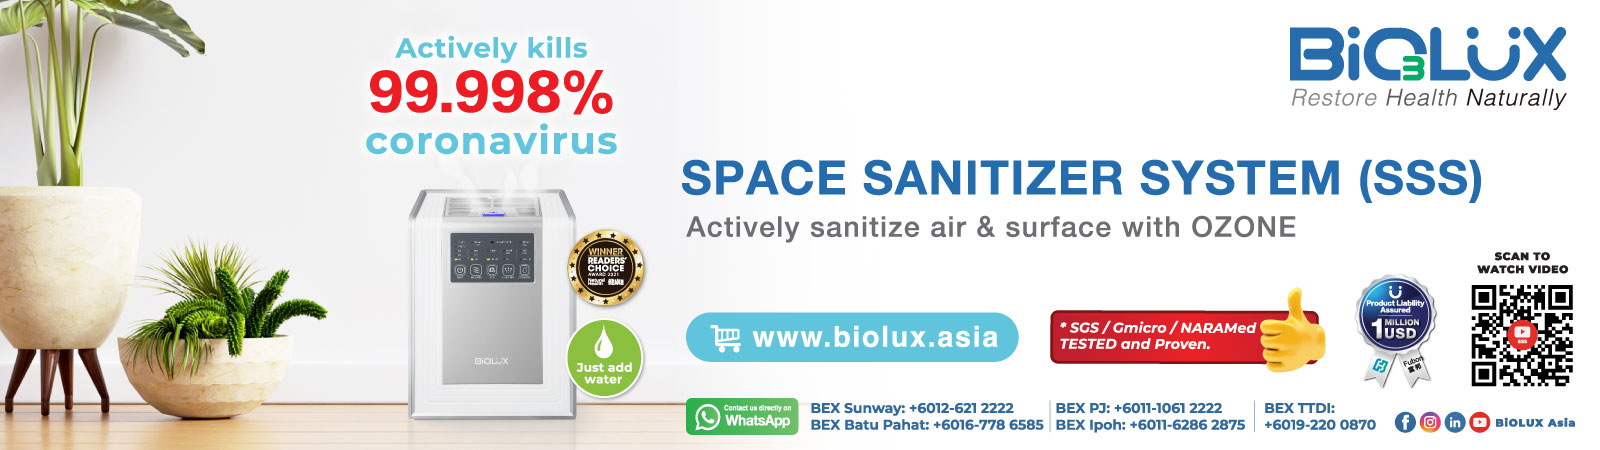 BiOLUX Space Sanitizer System